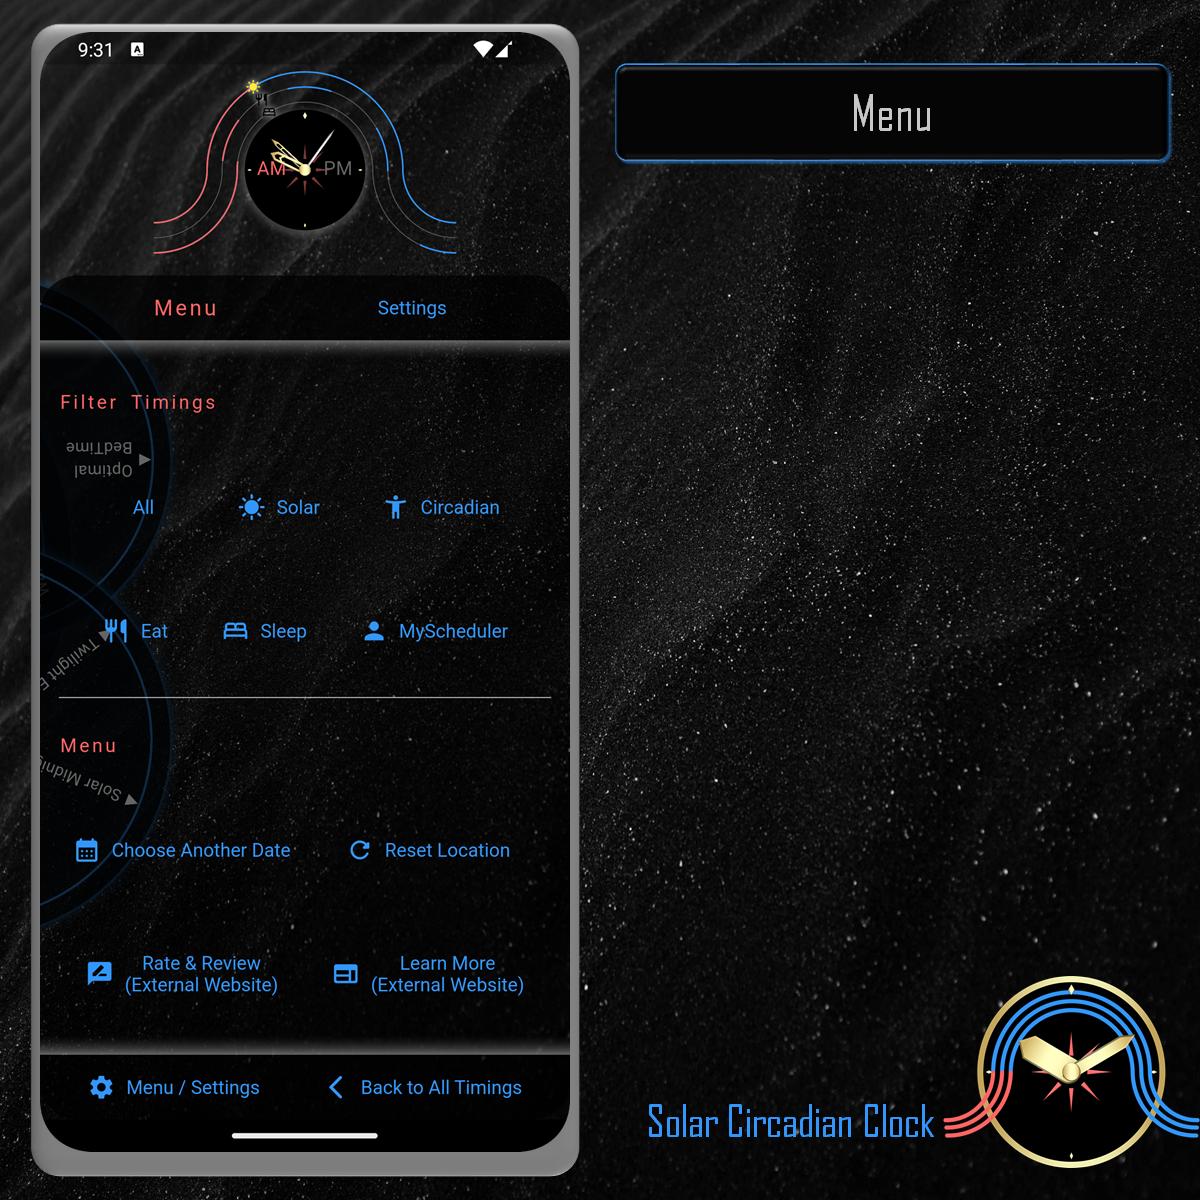 Solar Circadian Clock App - Data Screen - All Timings